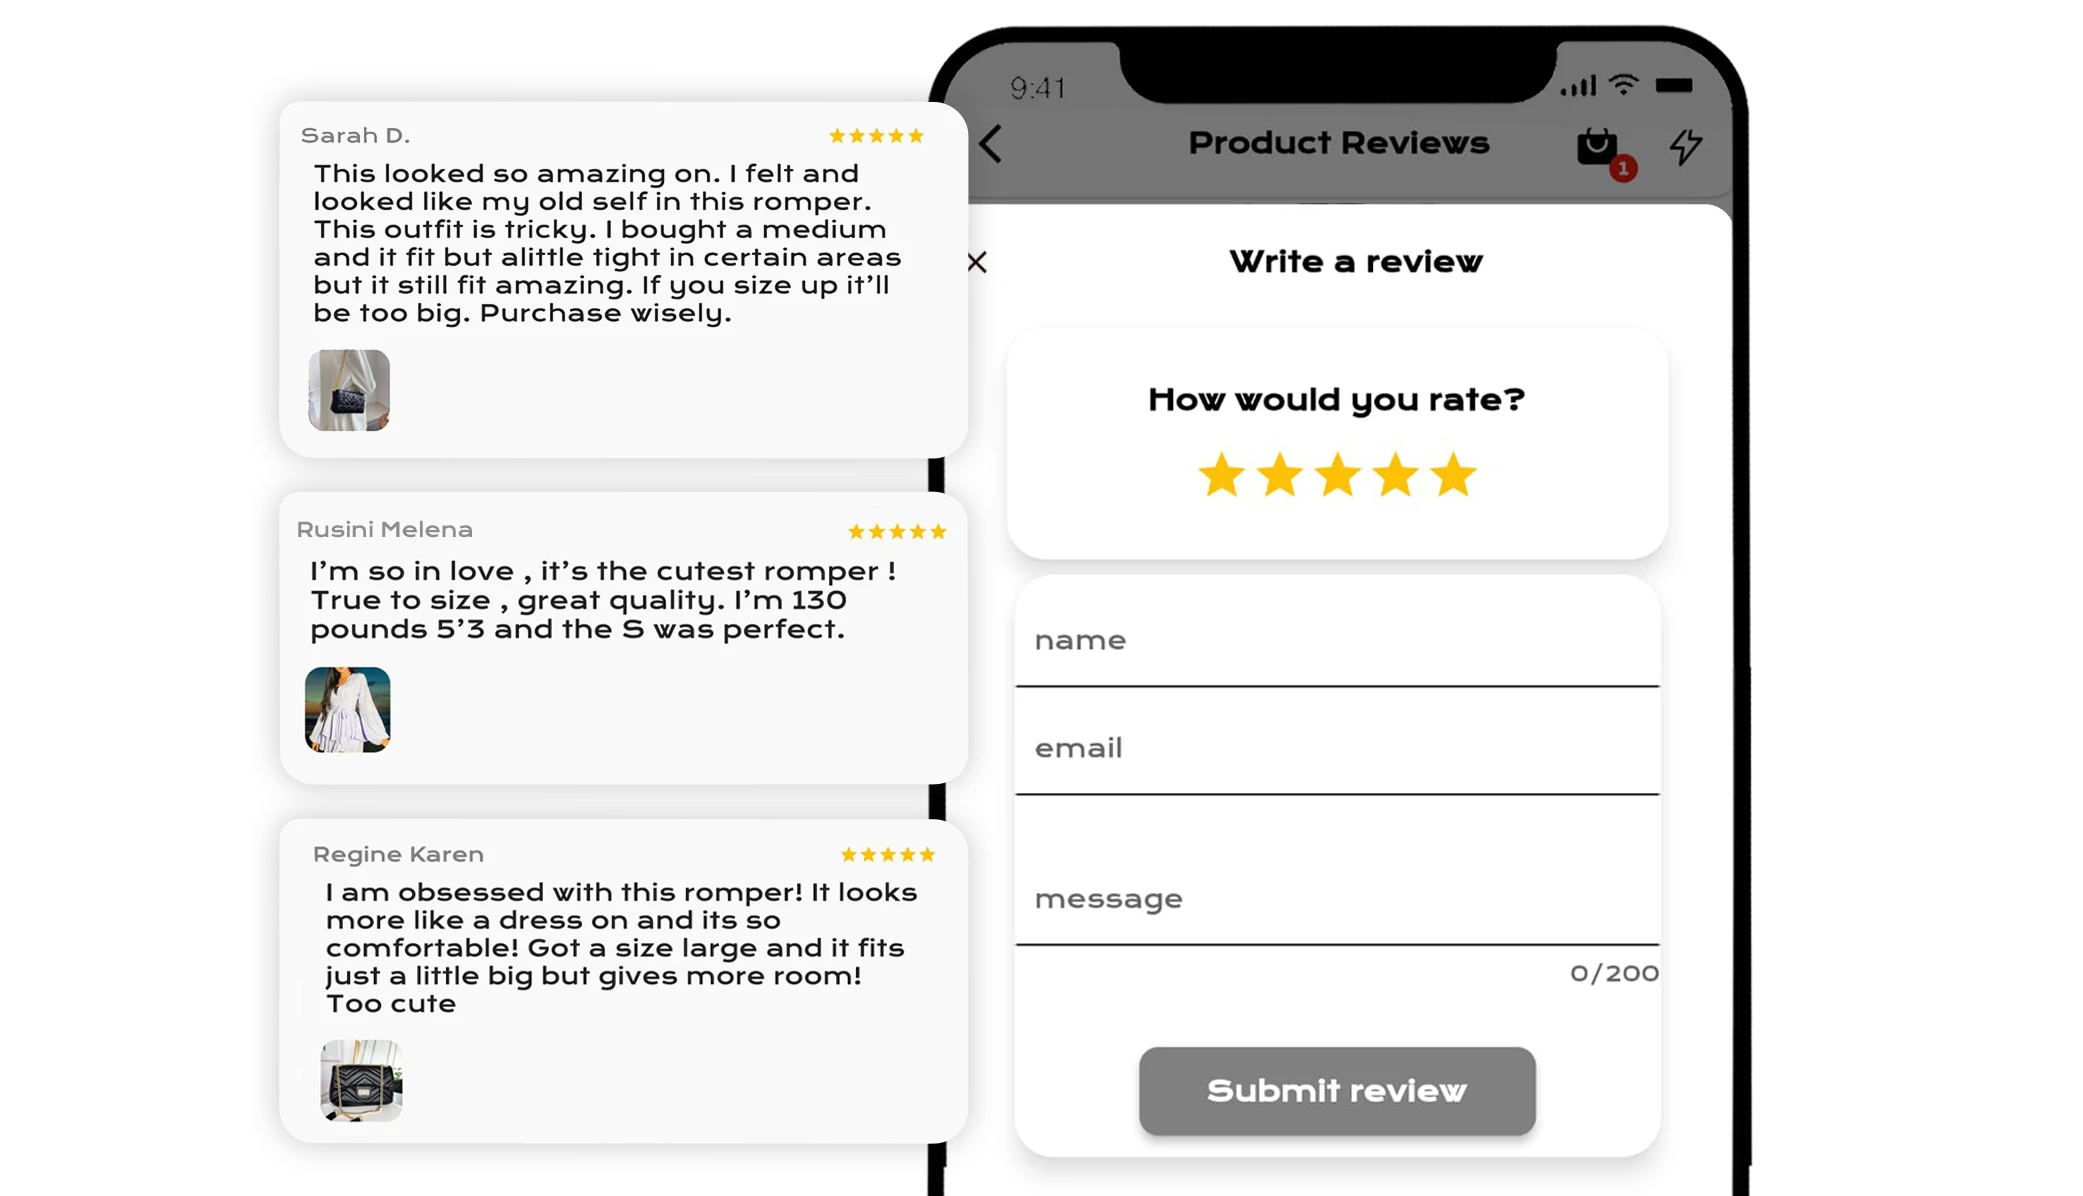 Rating & Reviews